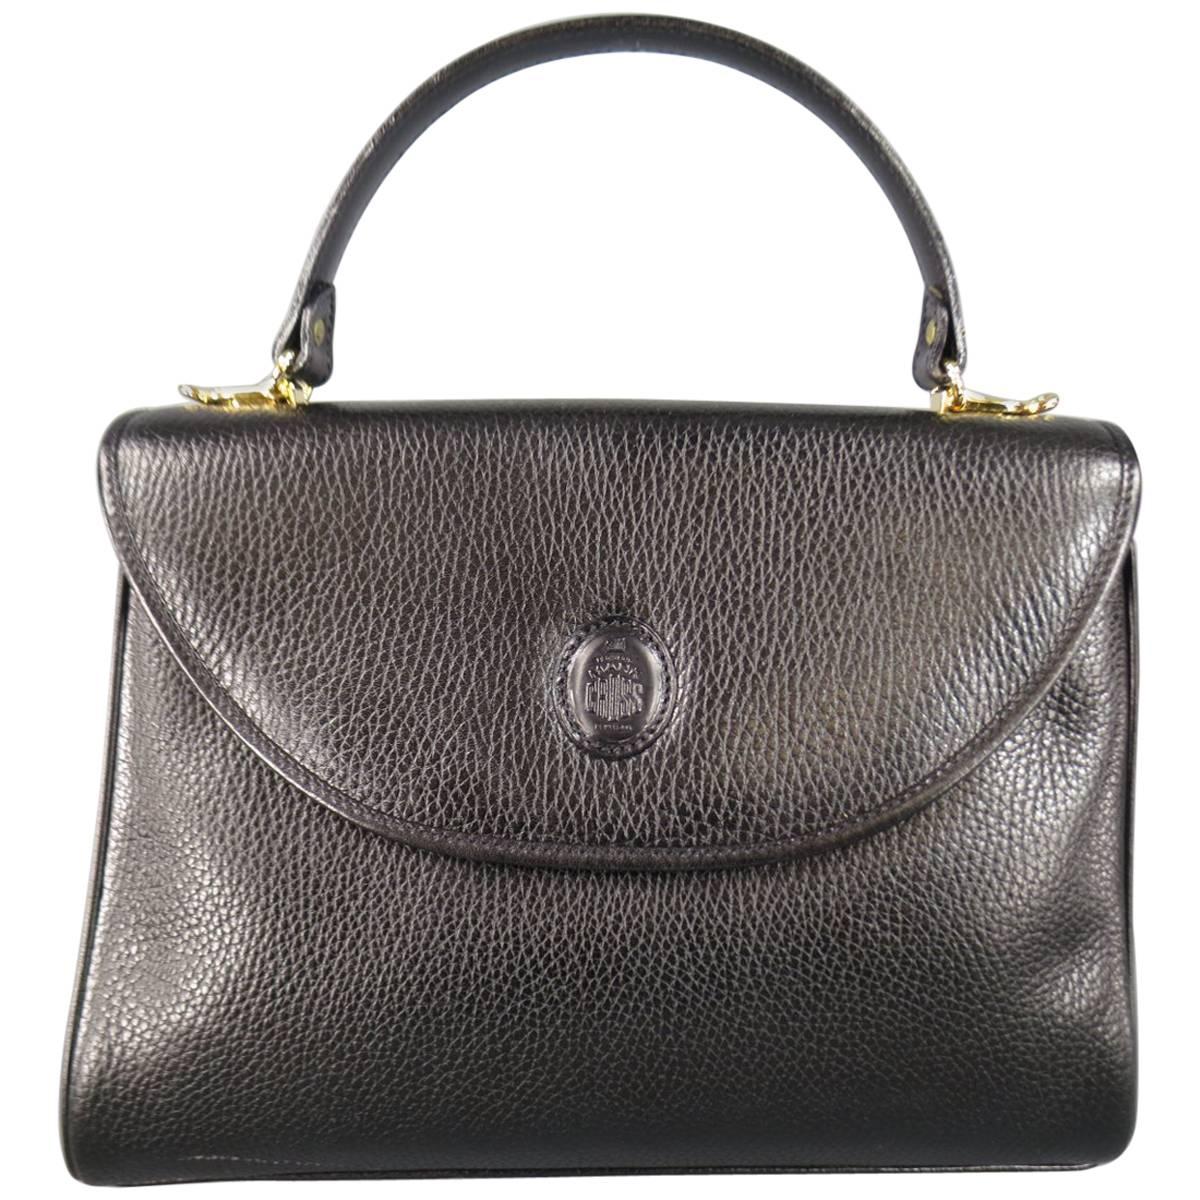 Vintage MARK CROSS Black Pebbled Leather Gold Hardware Murphy Satchel Handbag